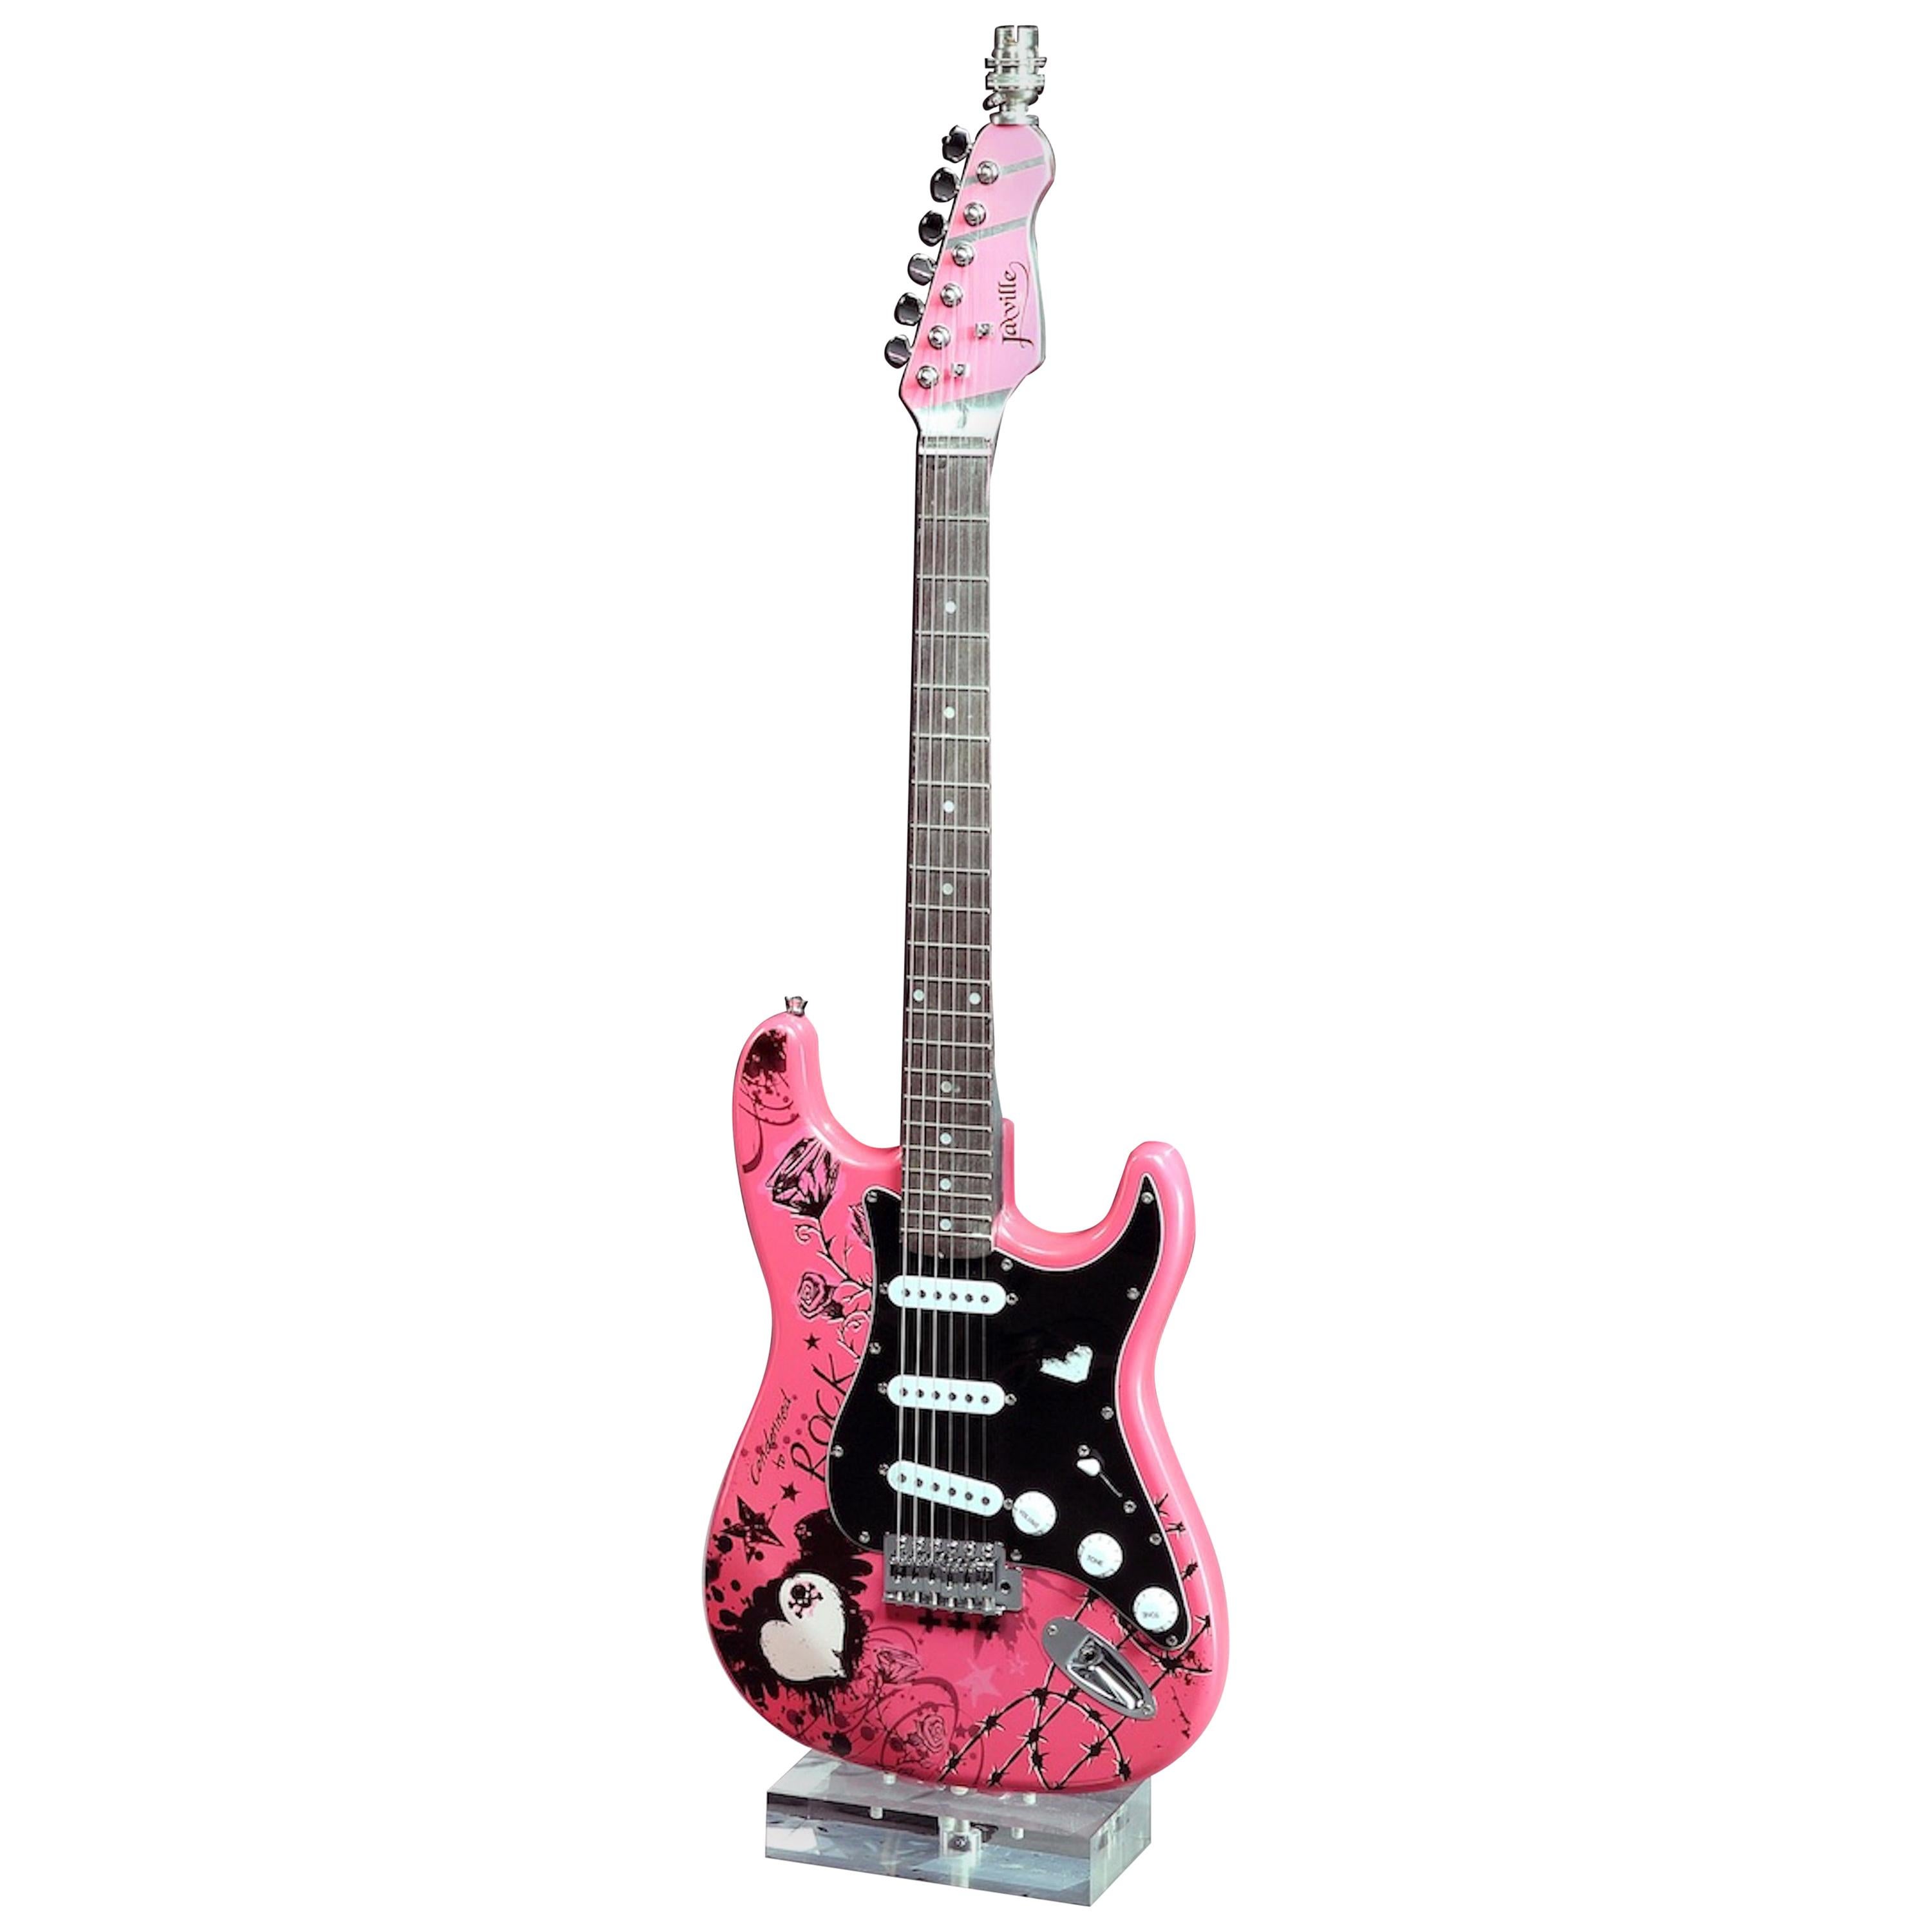 Lampe Gitarren Electric Punk Bubble Gum Pink, verchromter Ahornholz für Rock & Roll